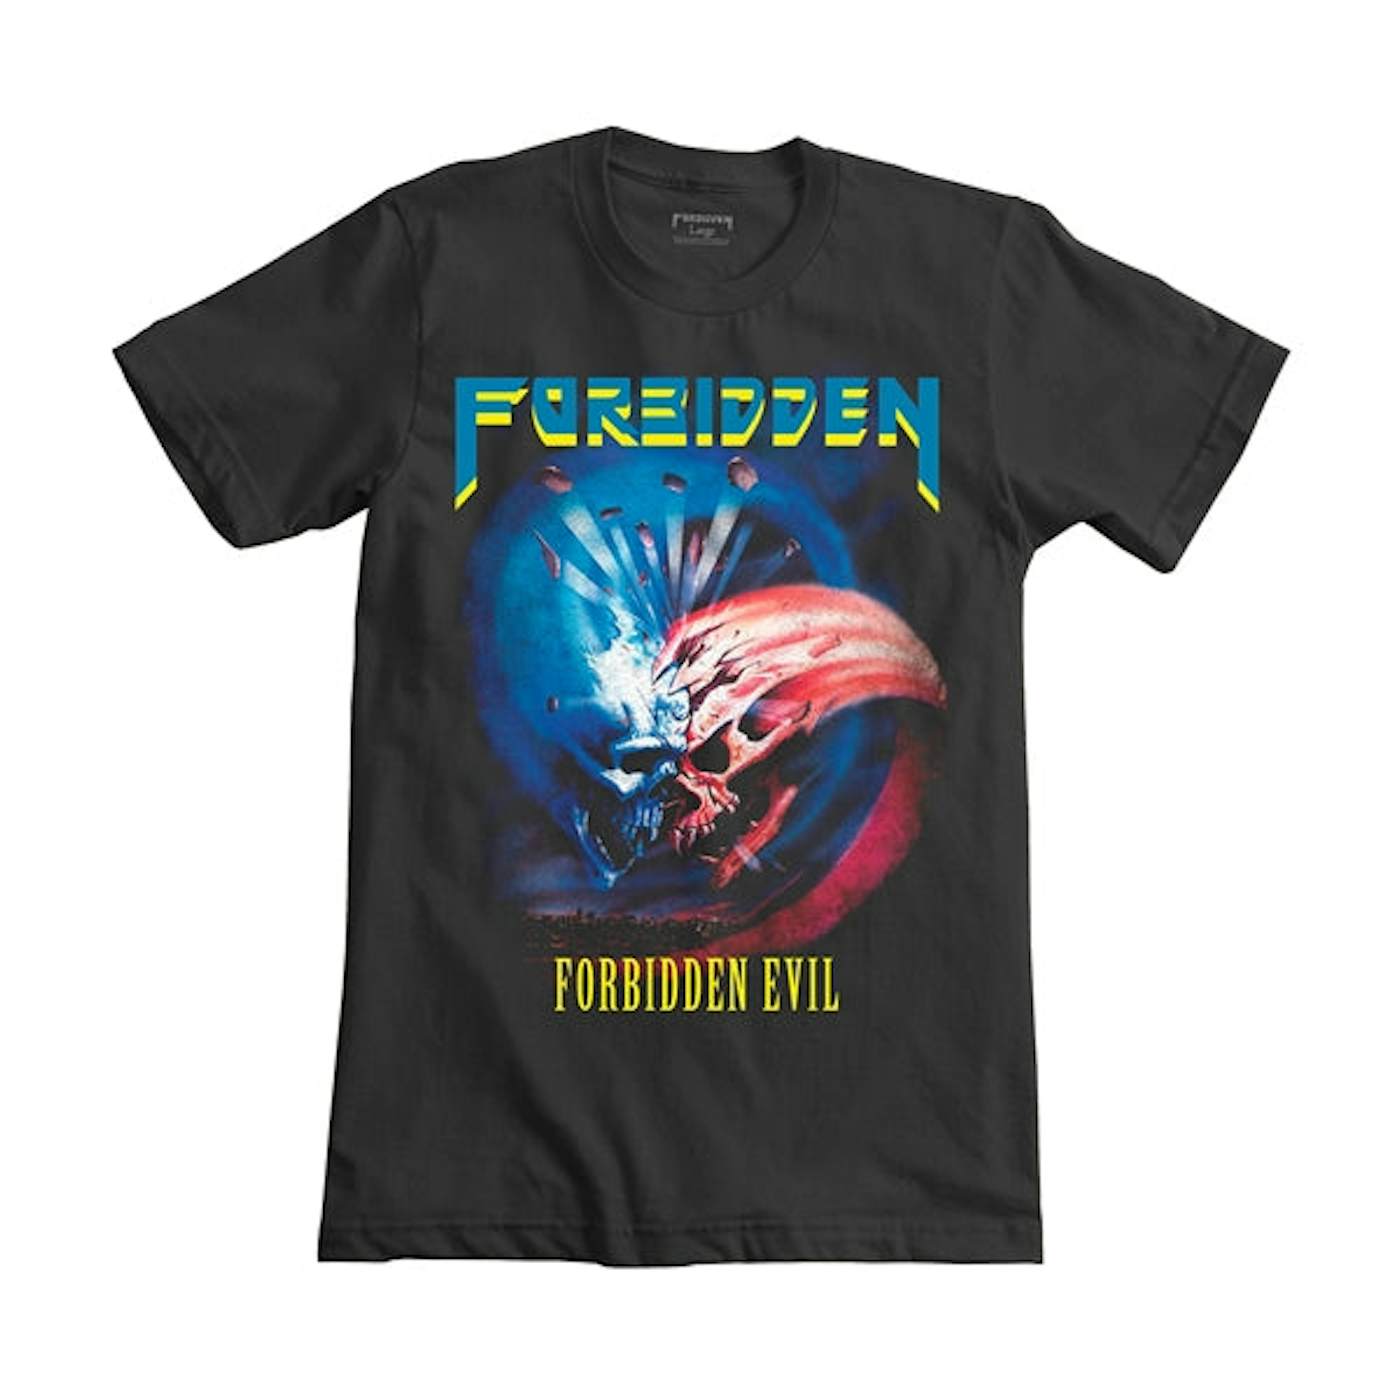 Forbidden T Shirt - Forbidden Evil